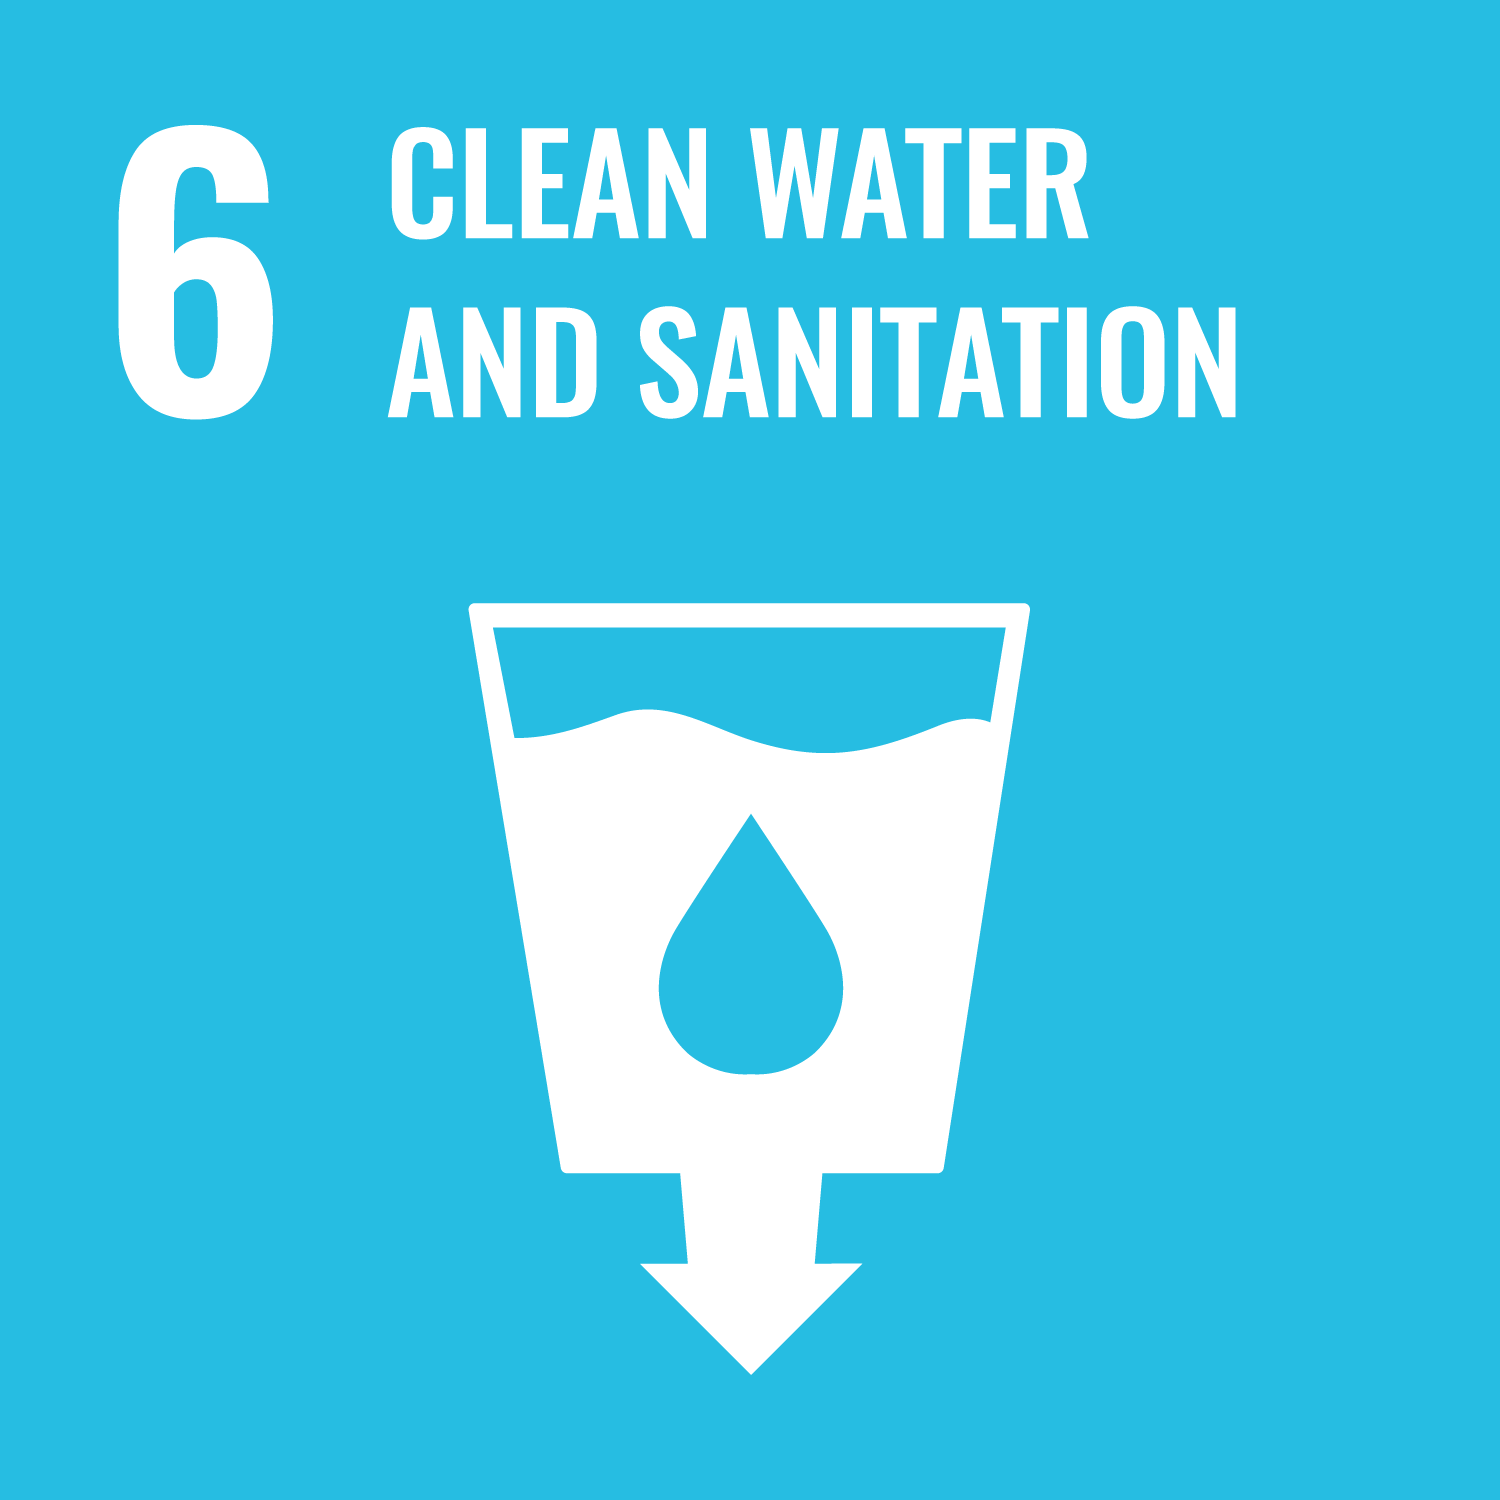 UN SDG 6 - Clean Water and Sanitation